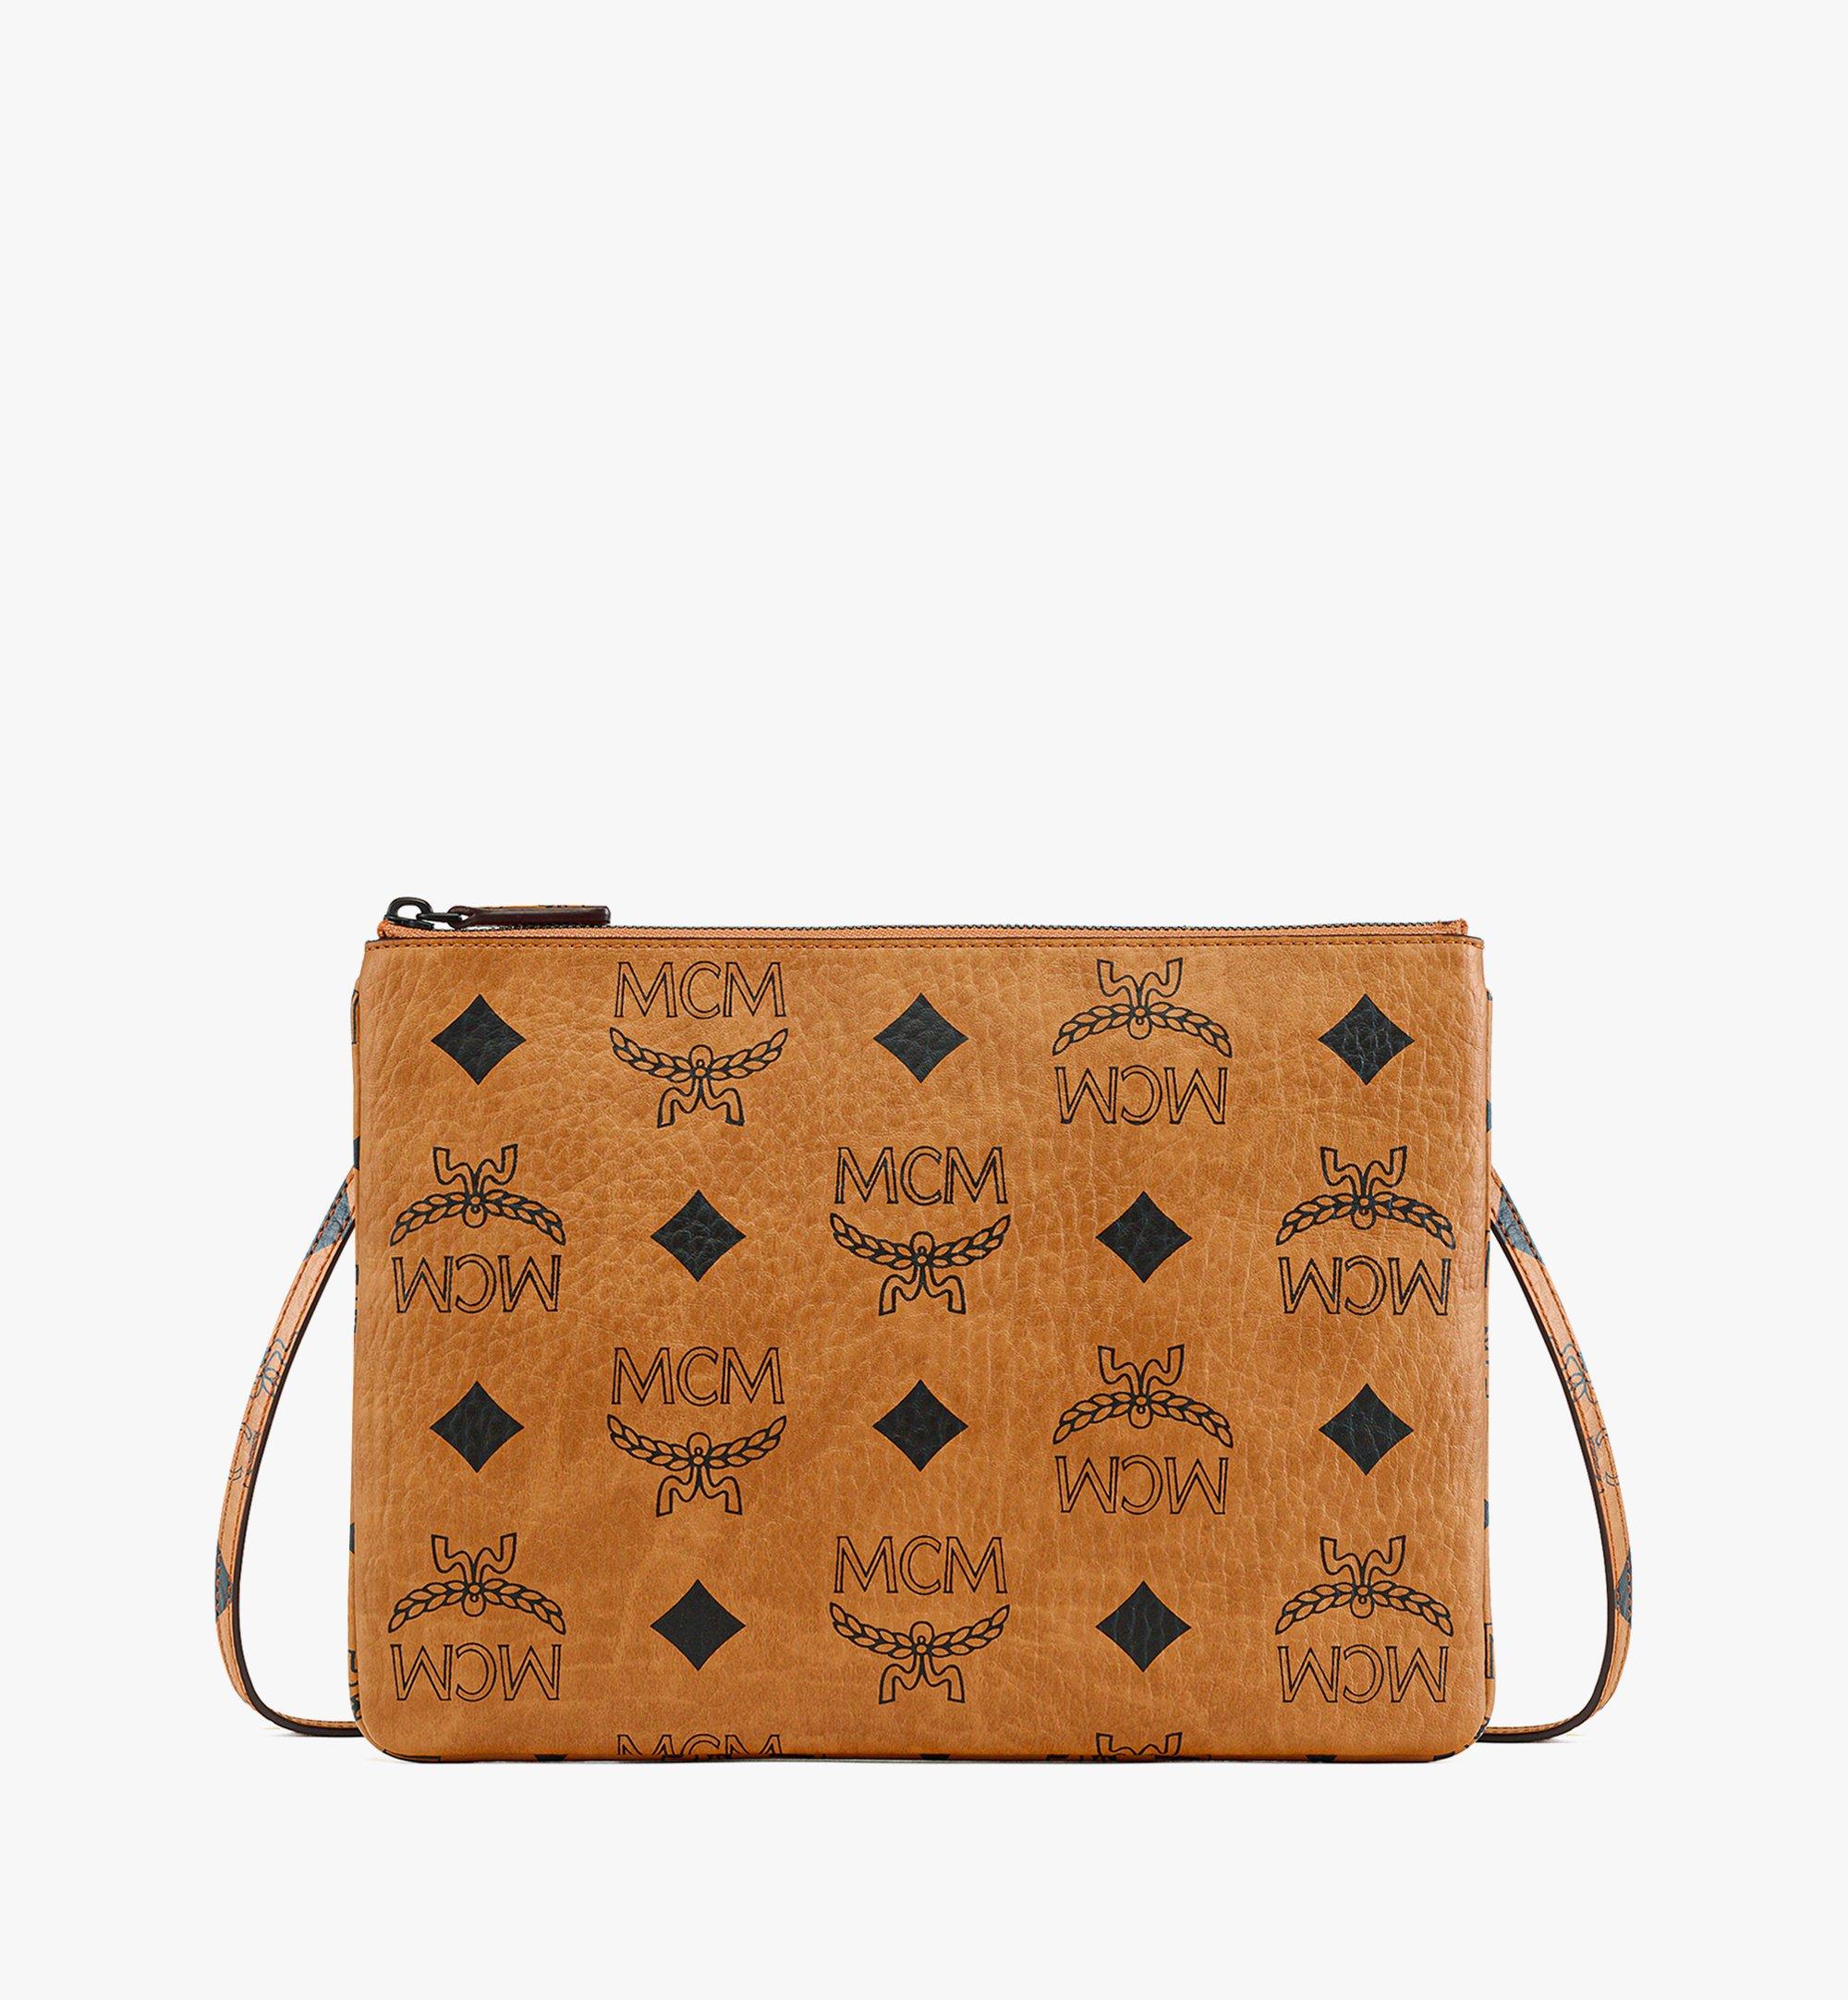 New MCM Black/Orange Leather Pouch Clutch Bag Wallet NEW Rare Original  Authentic